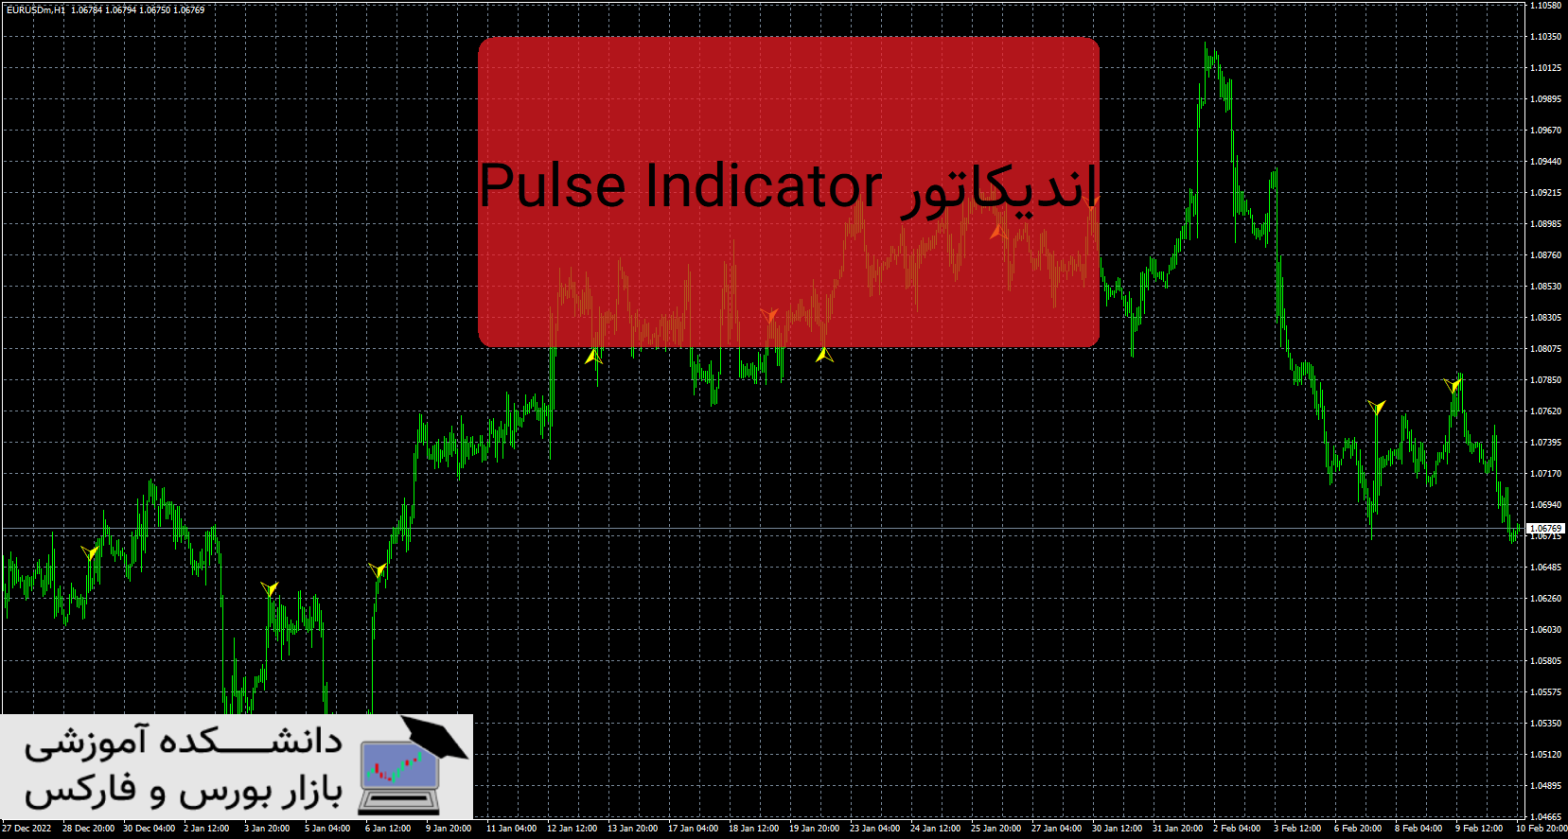 Pulse Indicator دانلود و معرفی اندیکاتور